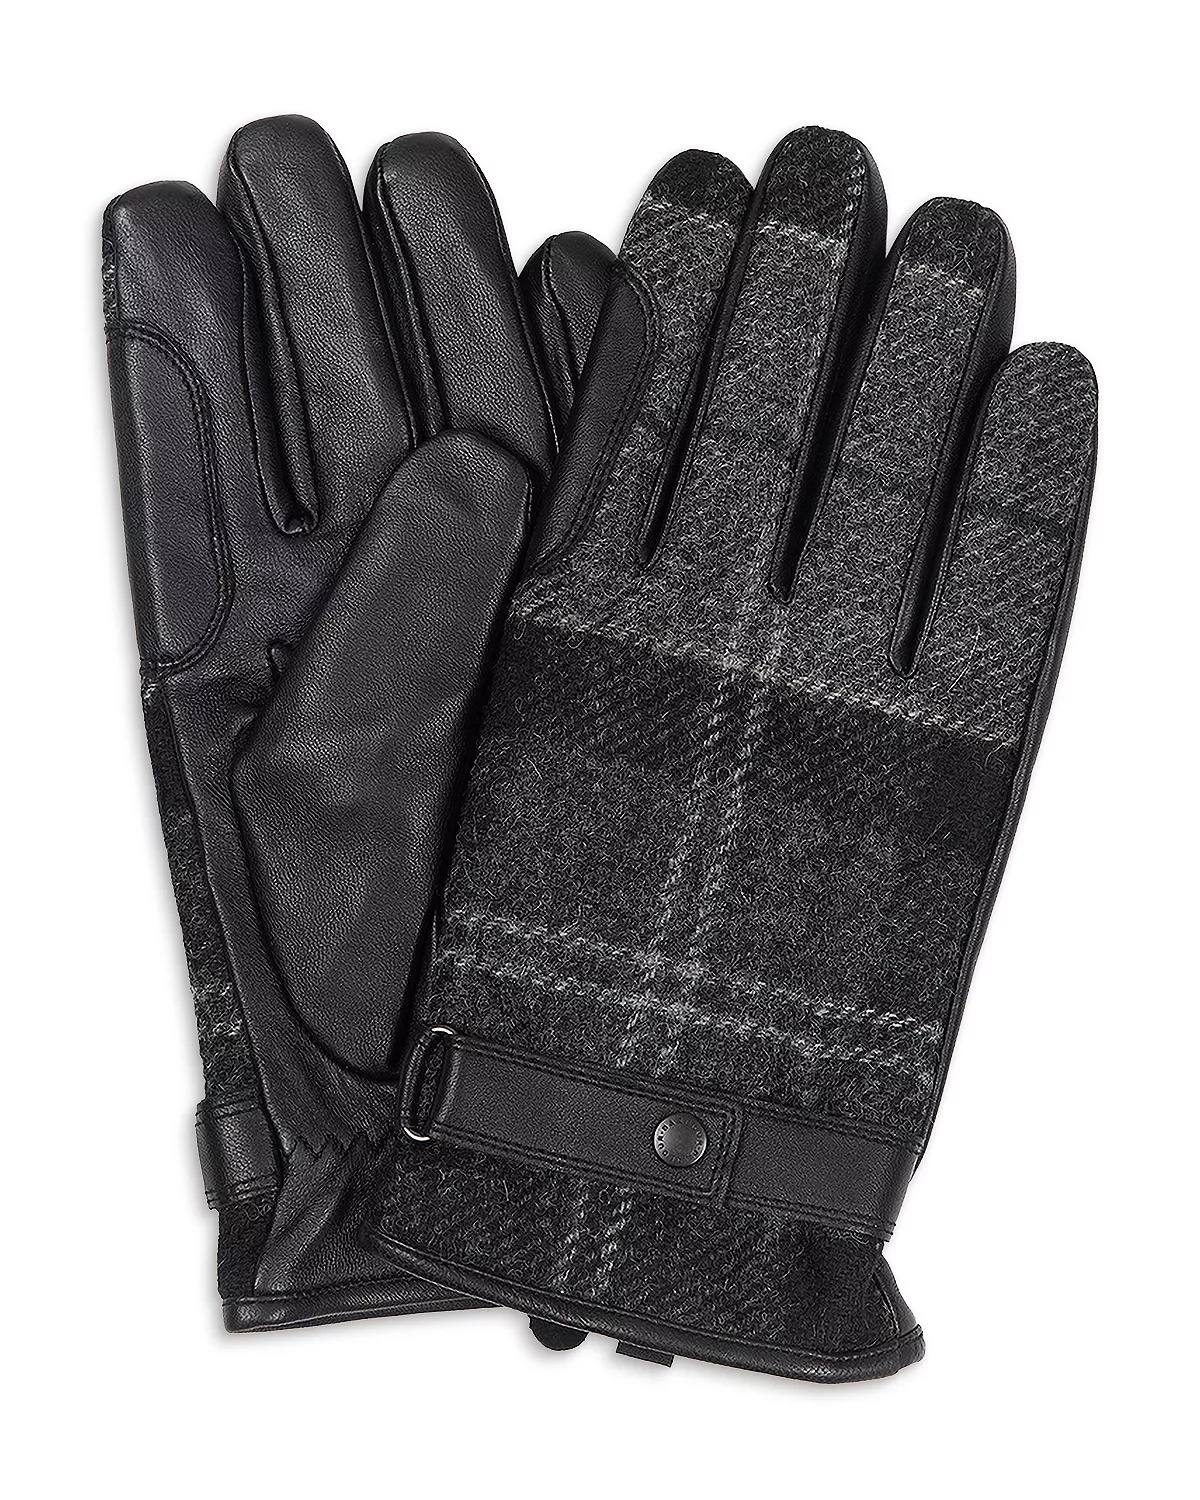 Newbrough Mixed Media Gloves - 1